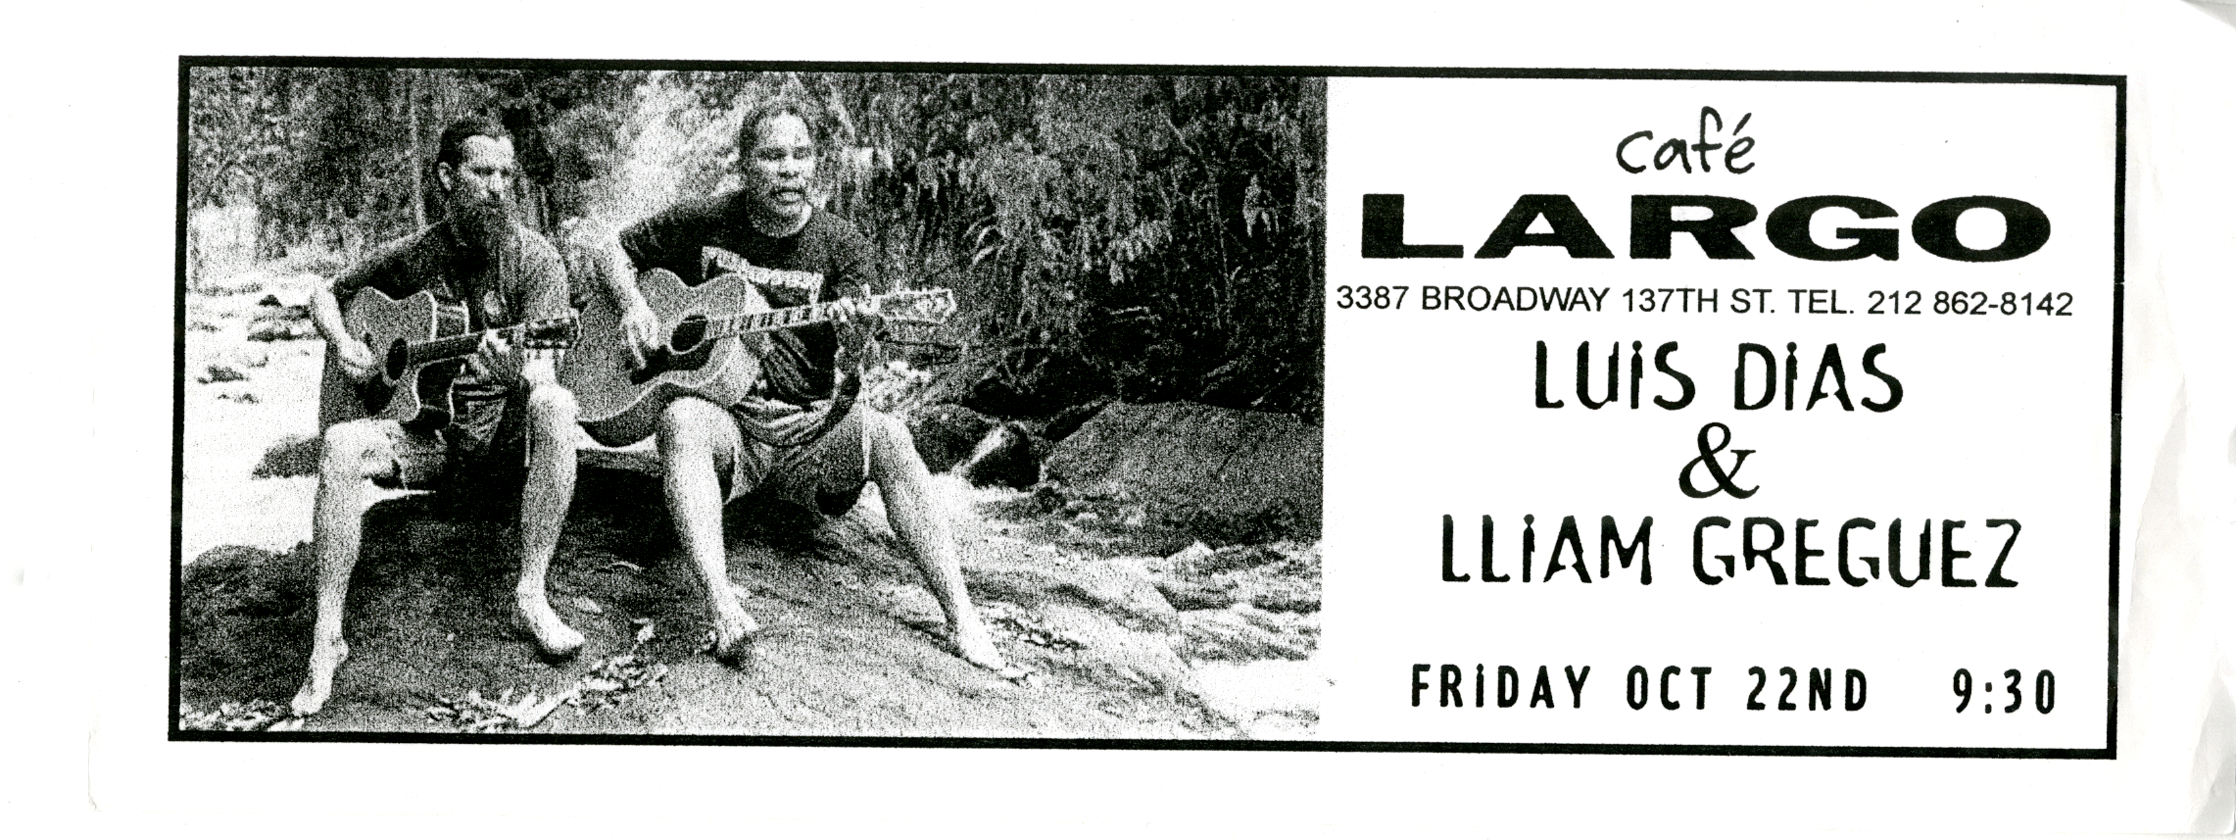 Luis Dias and Lliam Greguez in concert at Café Largo Flyer, October 22, ca. 1999.